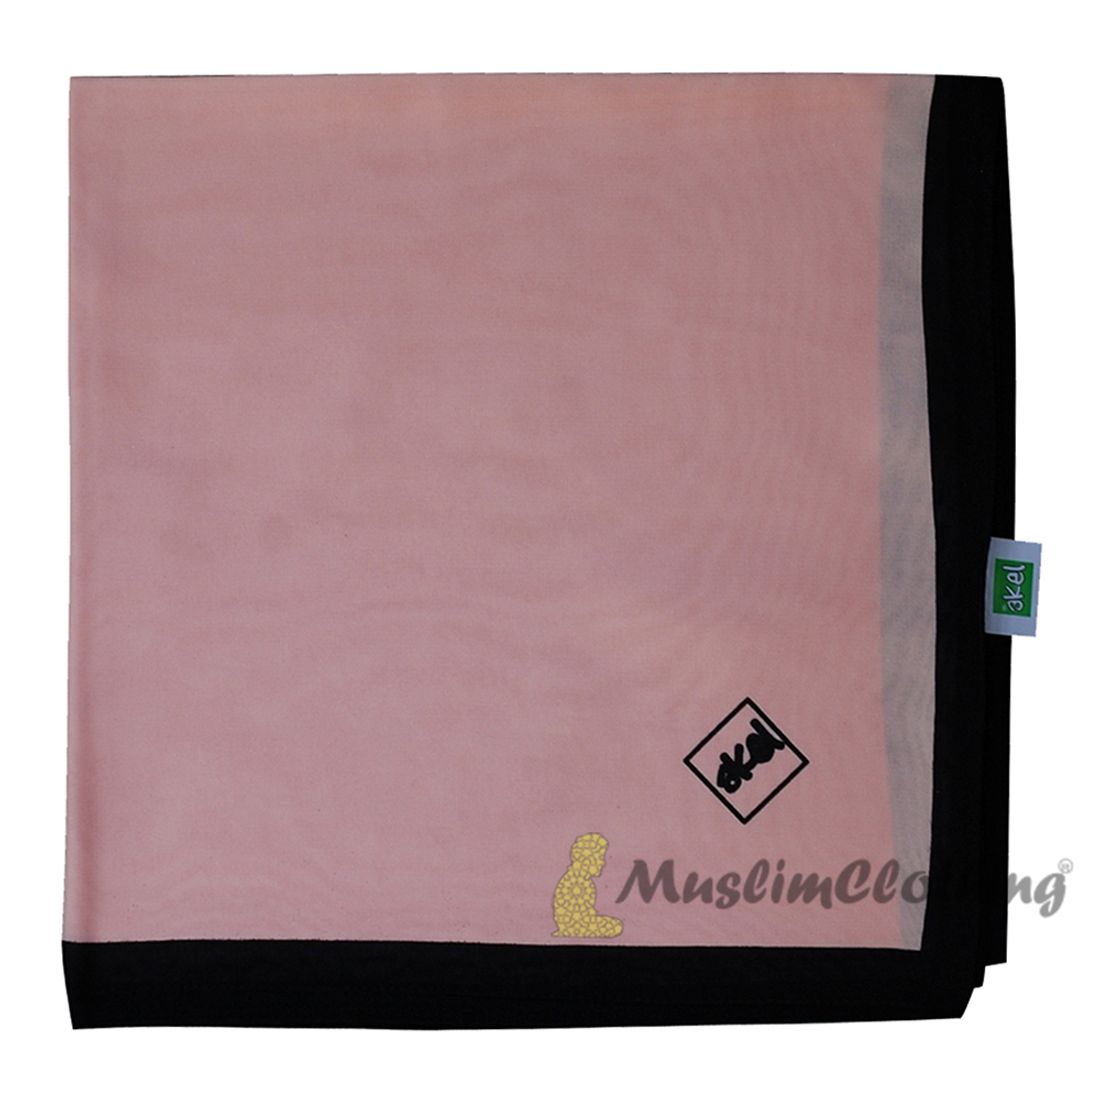 Pale Pink with Black Border Chiffon Scarf Hijab Shawl Islamic Headwear